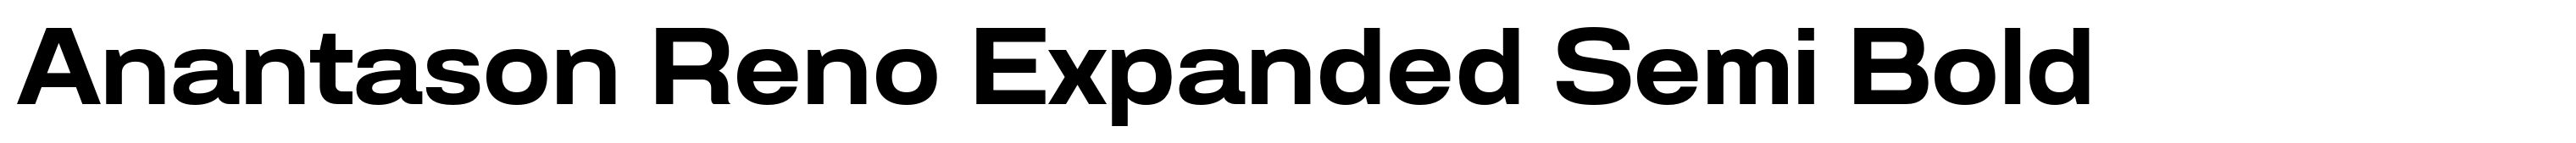 Anantason Reno Expanded Semi Bold